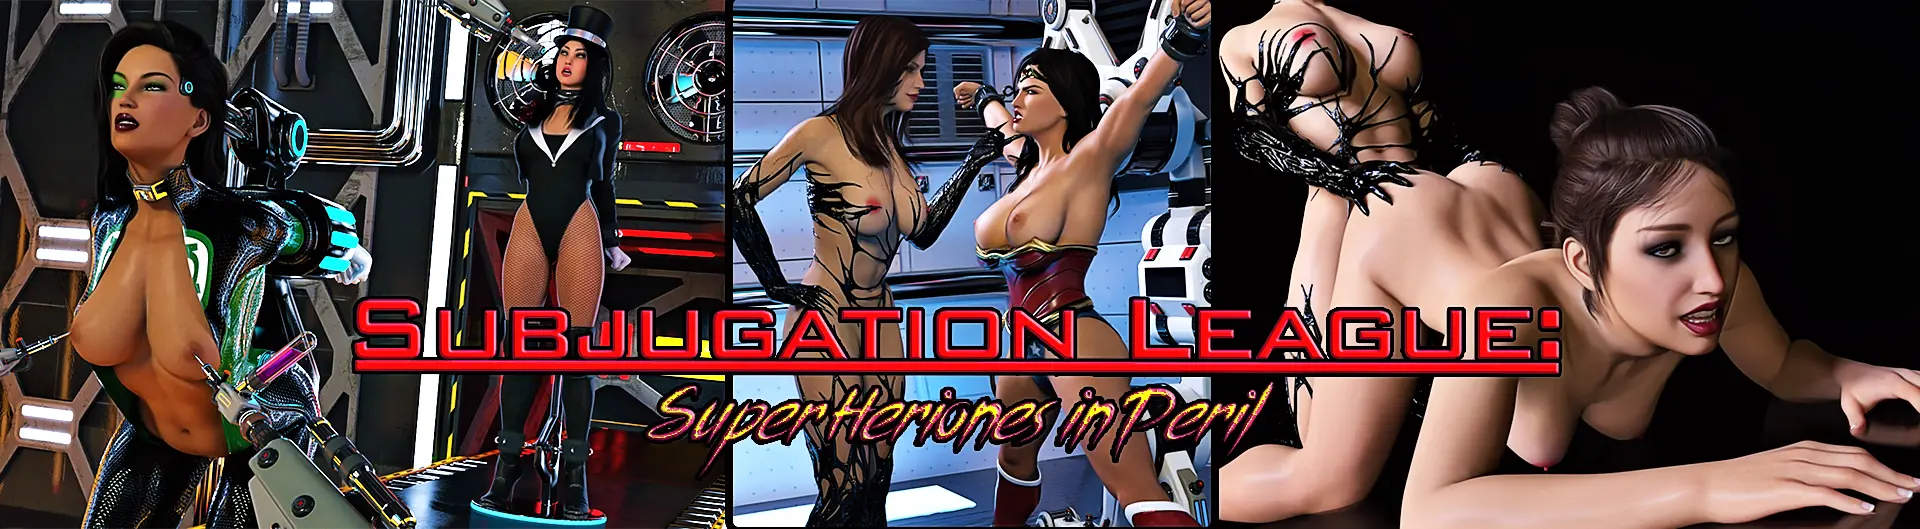 Subjugation League: Super Heroines in Peril main image